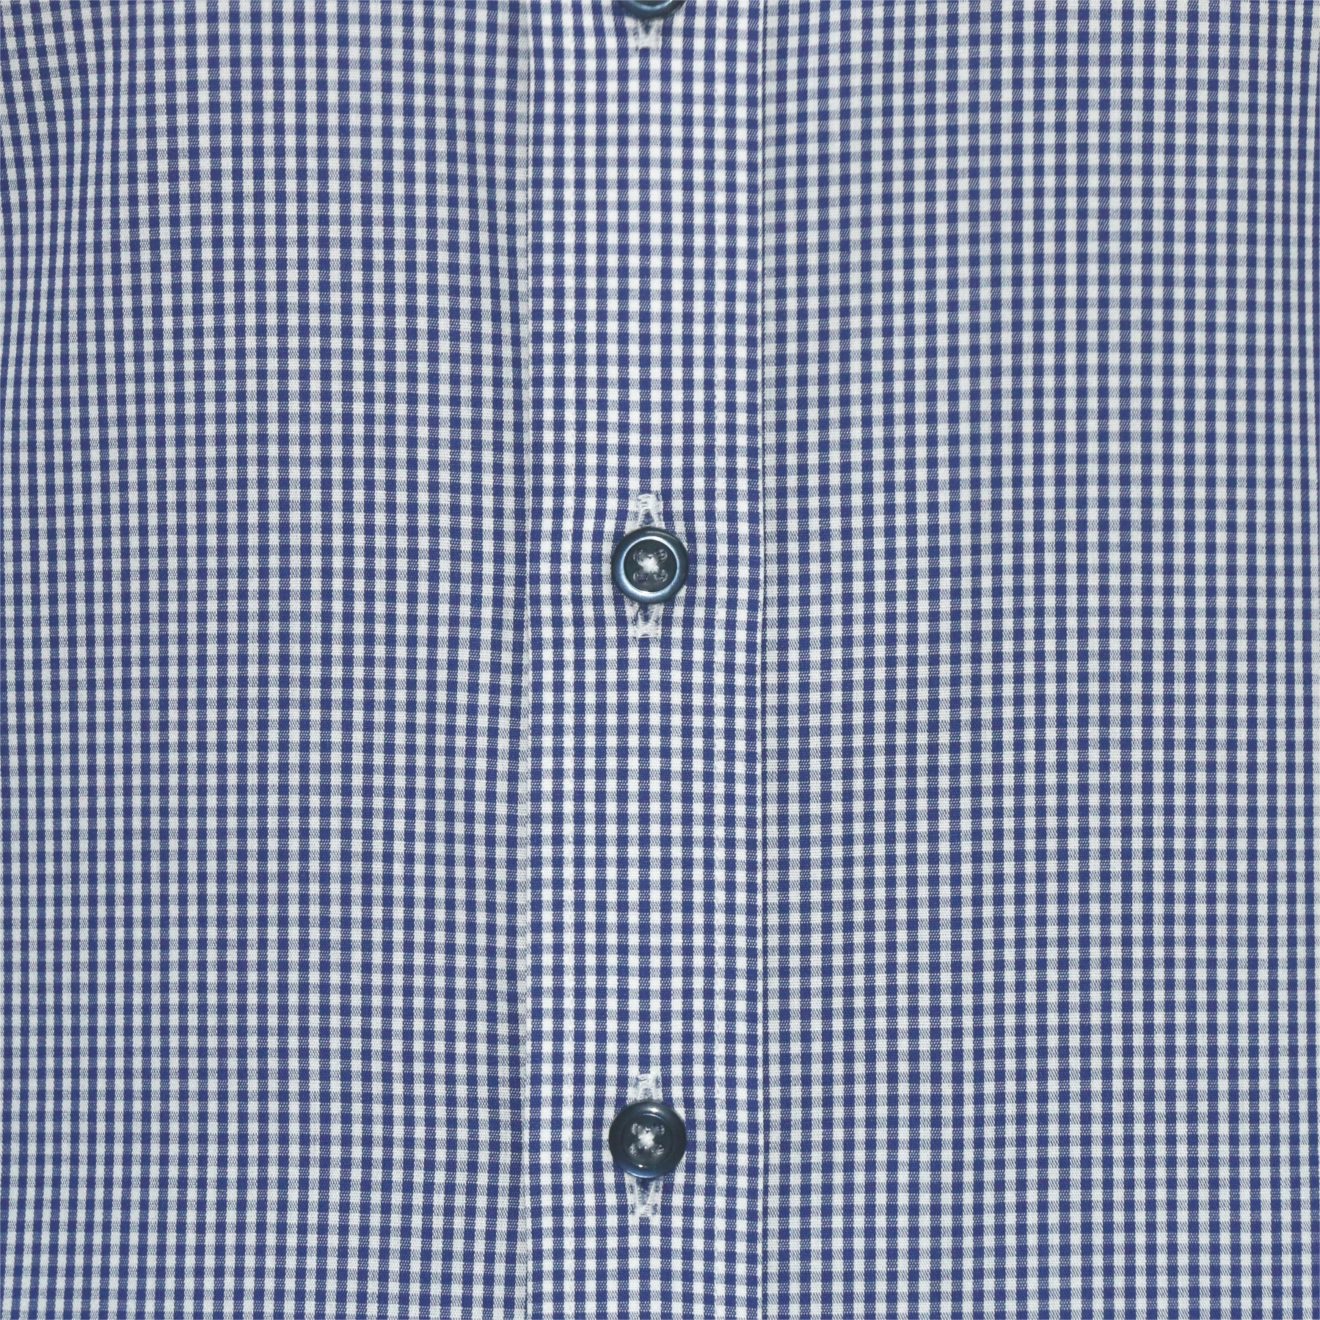 Tab Collar Shirts - Online Shopping - John Clothier London